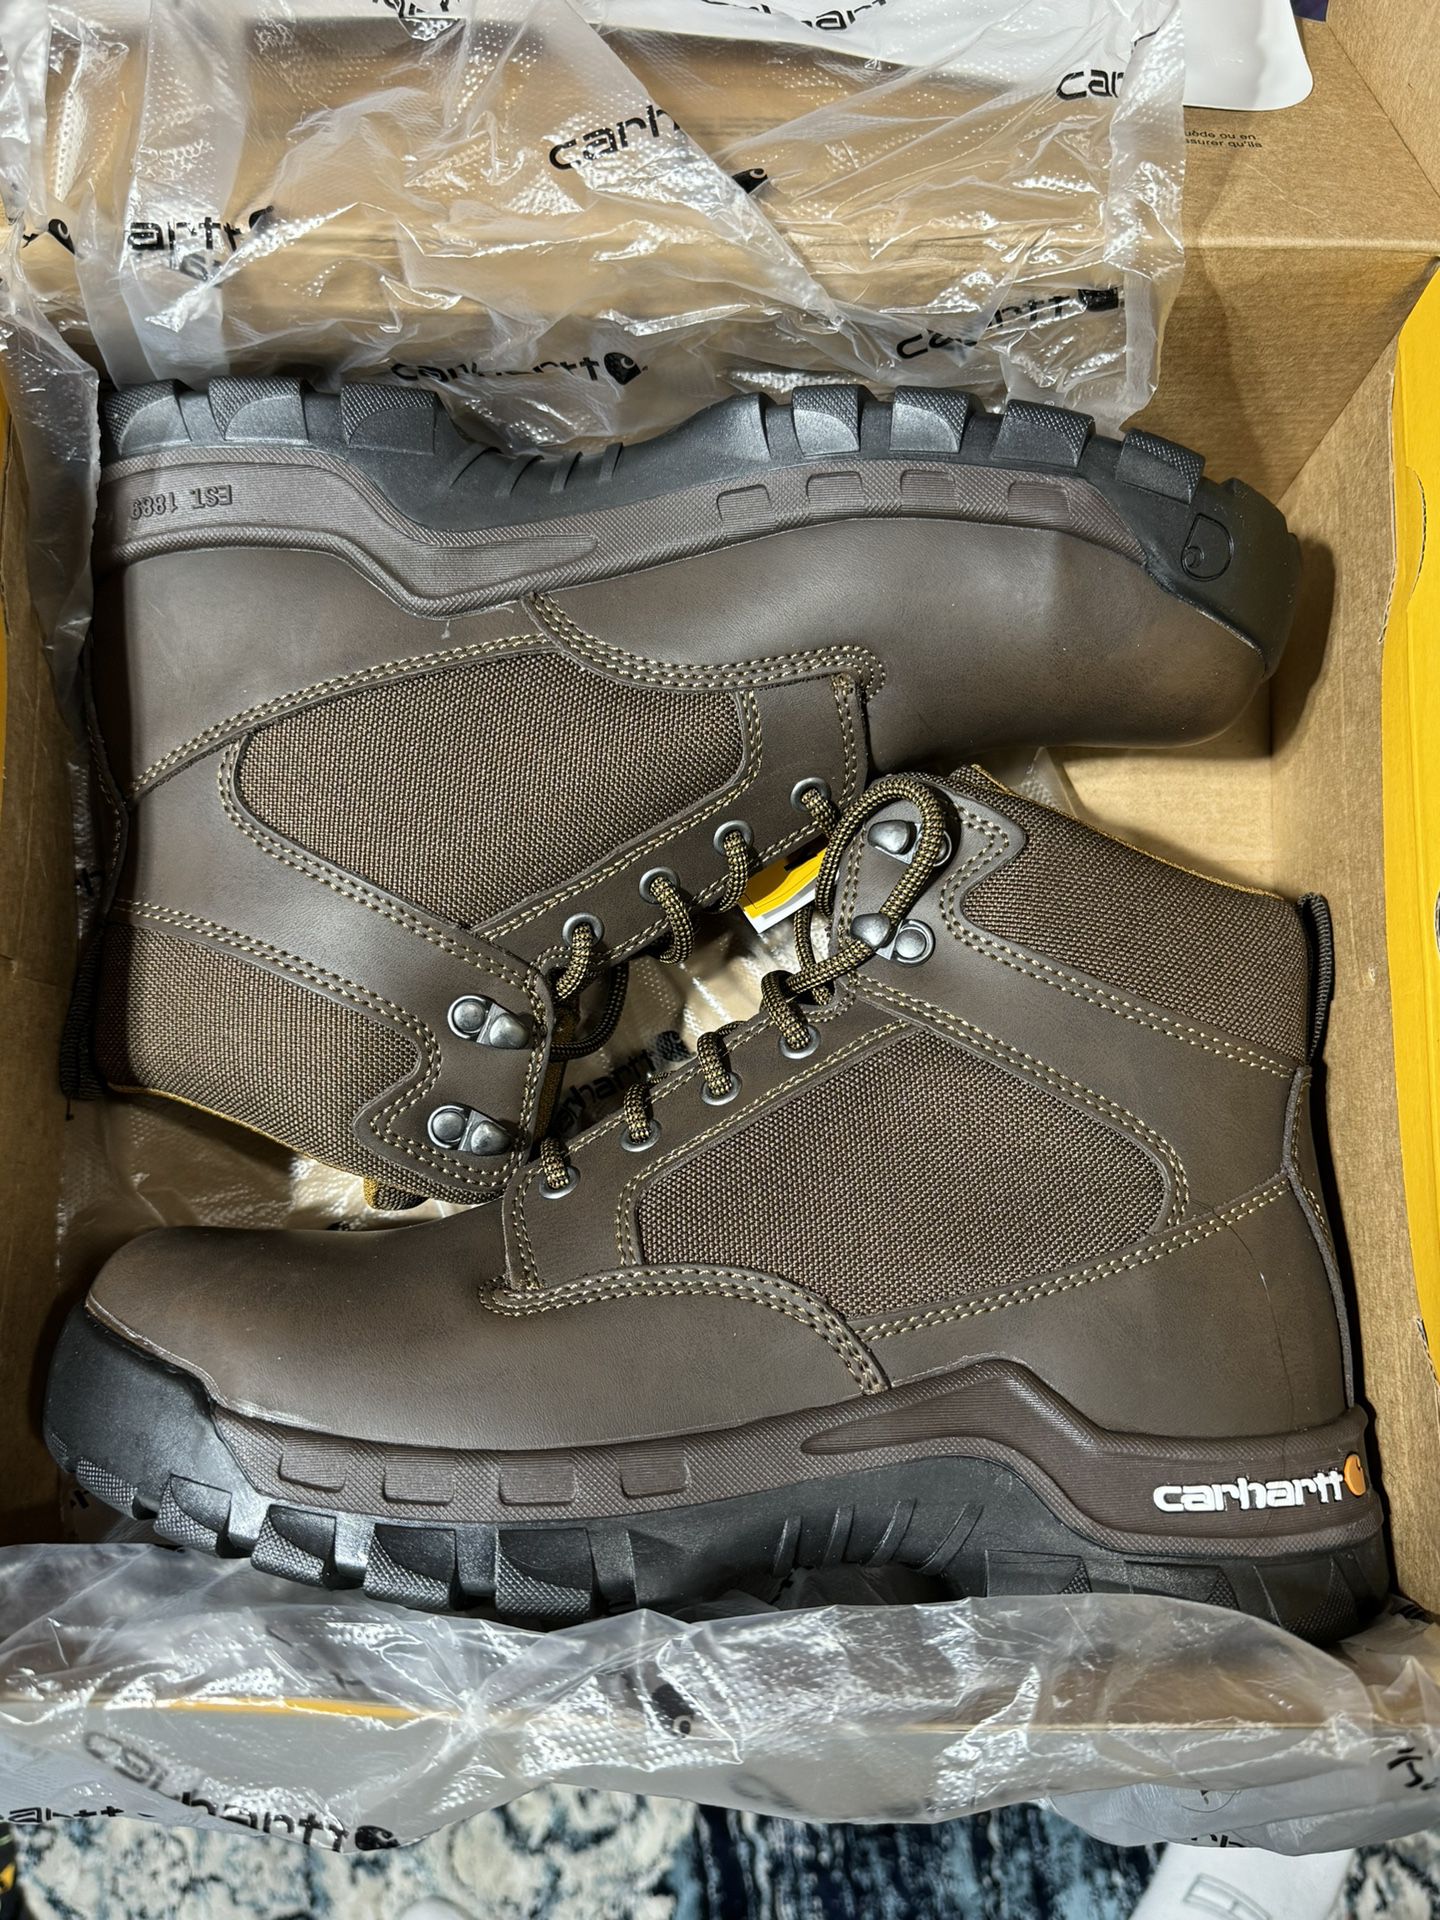 Carhartt 6” Steel Toe Work Boots Size 9 Men’s NEW!